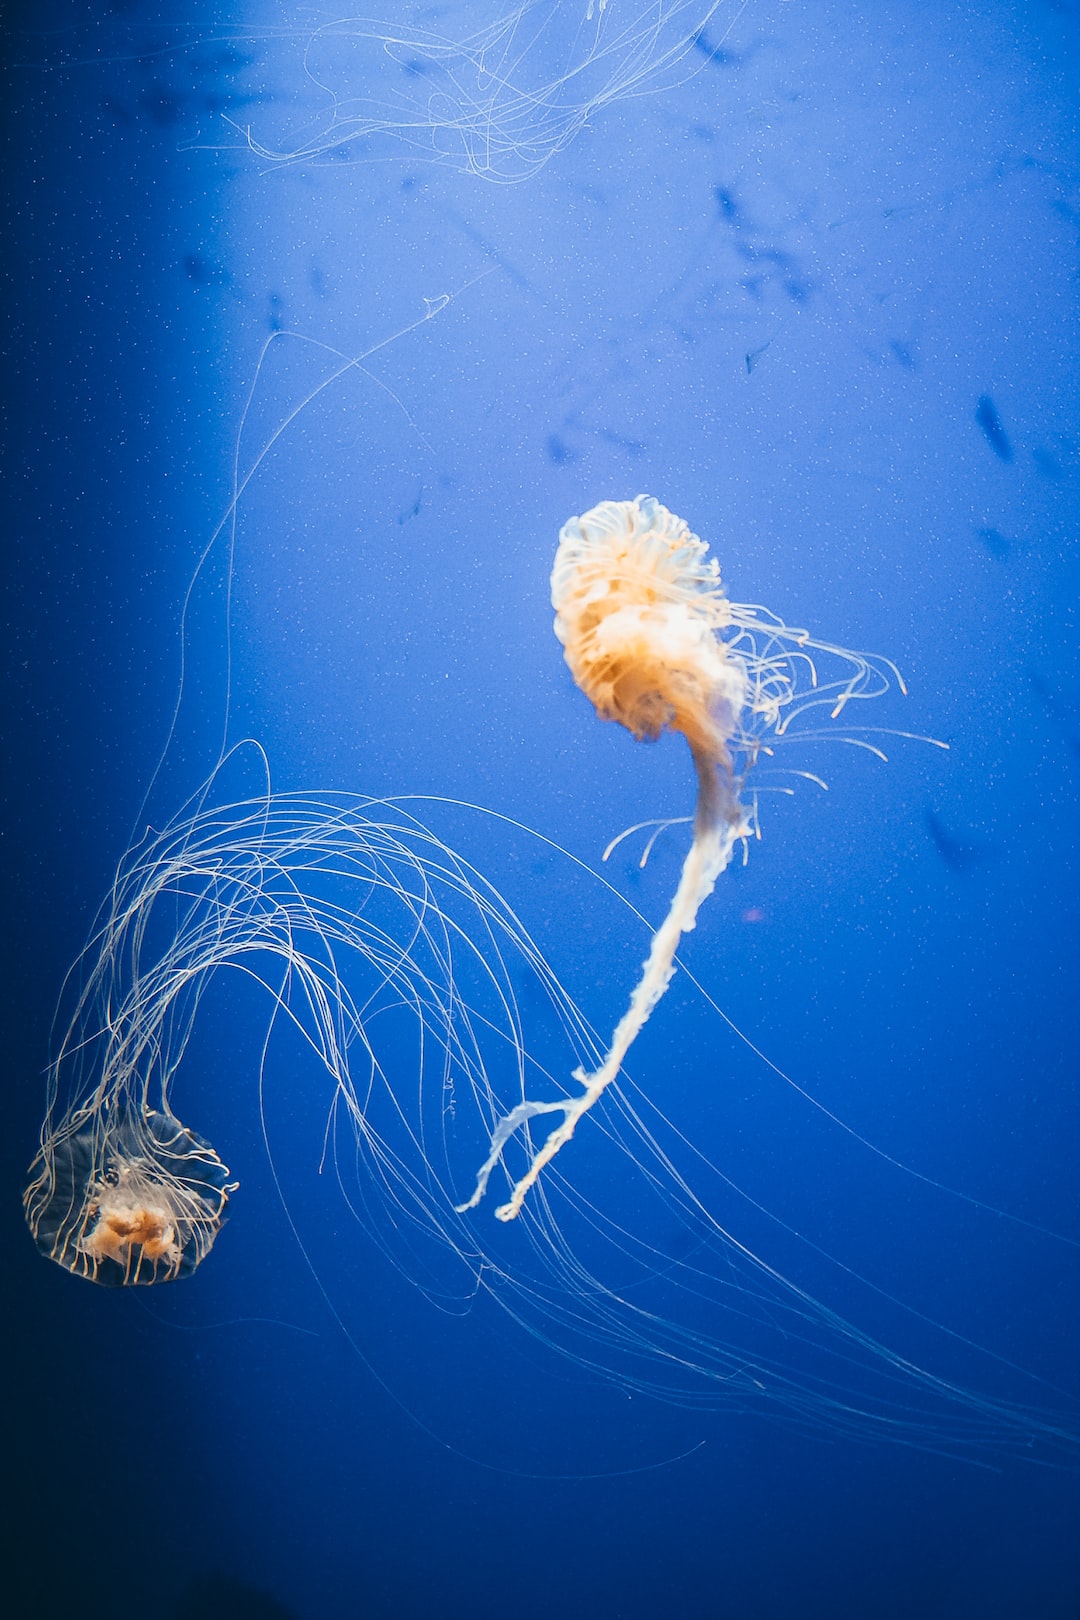 25 wichtige Fragen zu Wieviel Cm Kies Im Aquarium